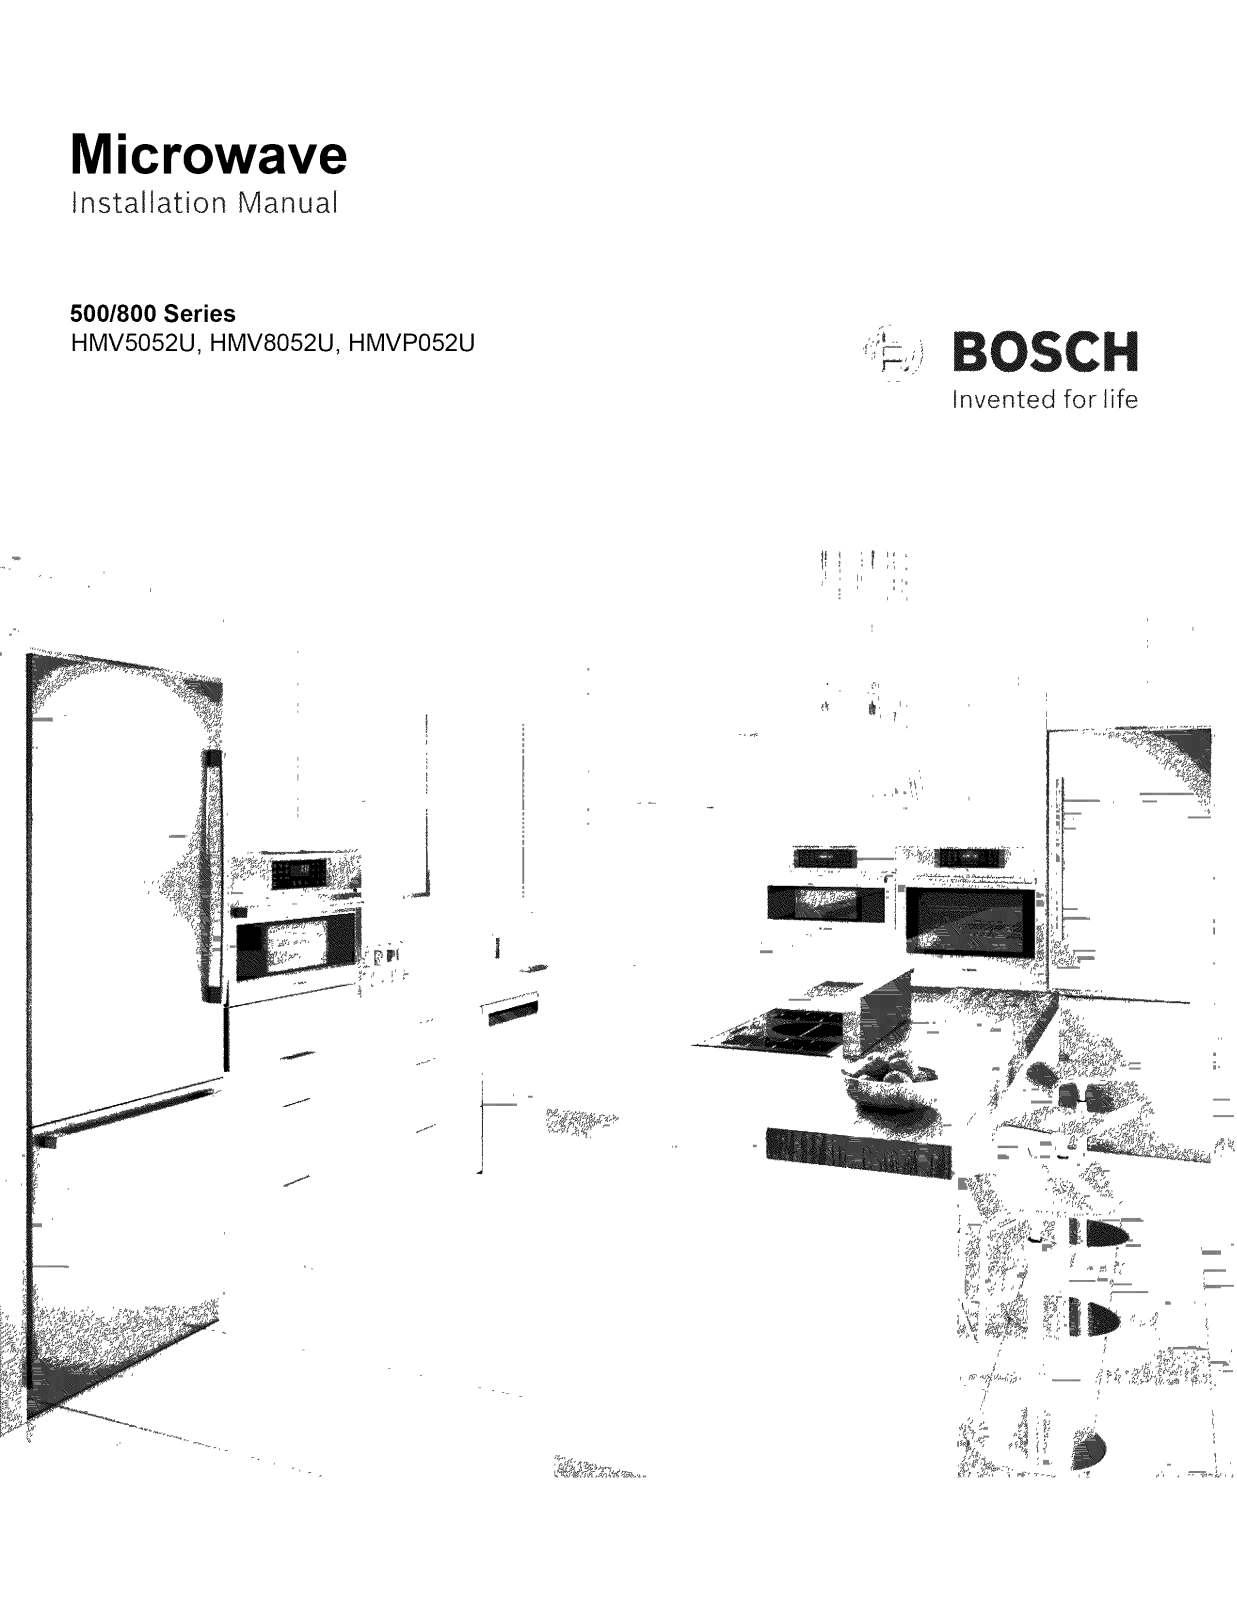 Bosch HMV8052U/02, HMV8052U/01, HMV5052U/02, HMV5052U/01 Installation Guide